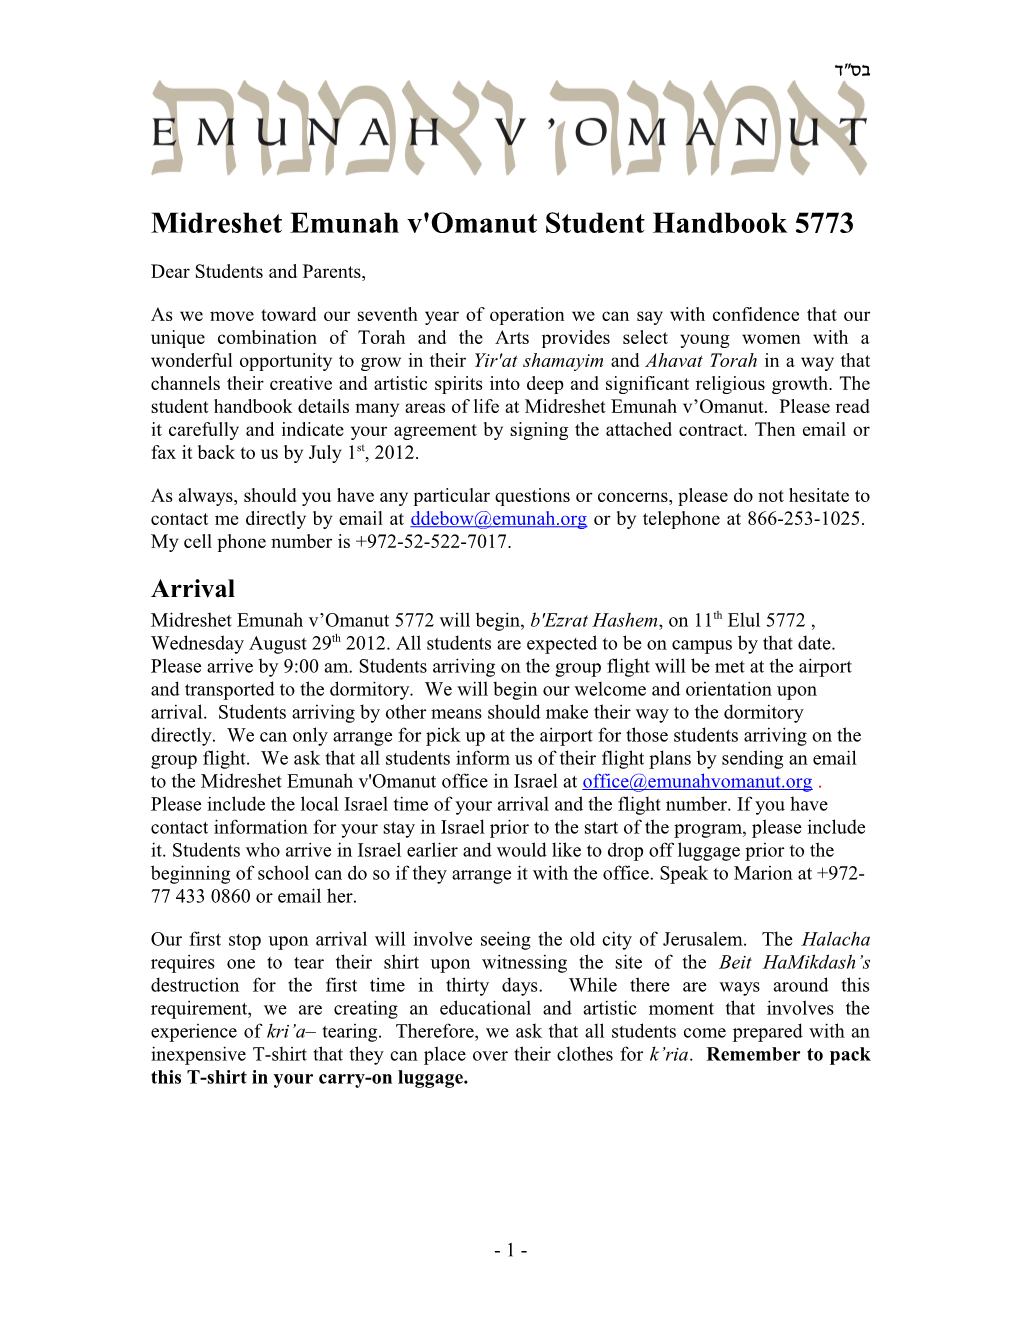 Midreshet Emunah V'omanut Student Handbook 5773